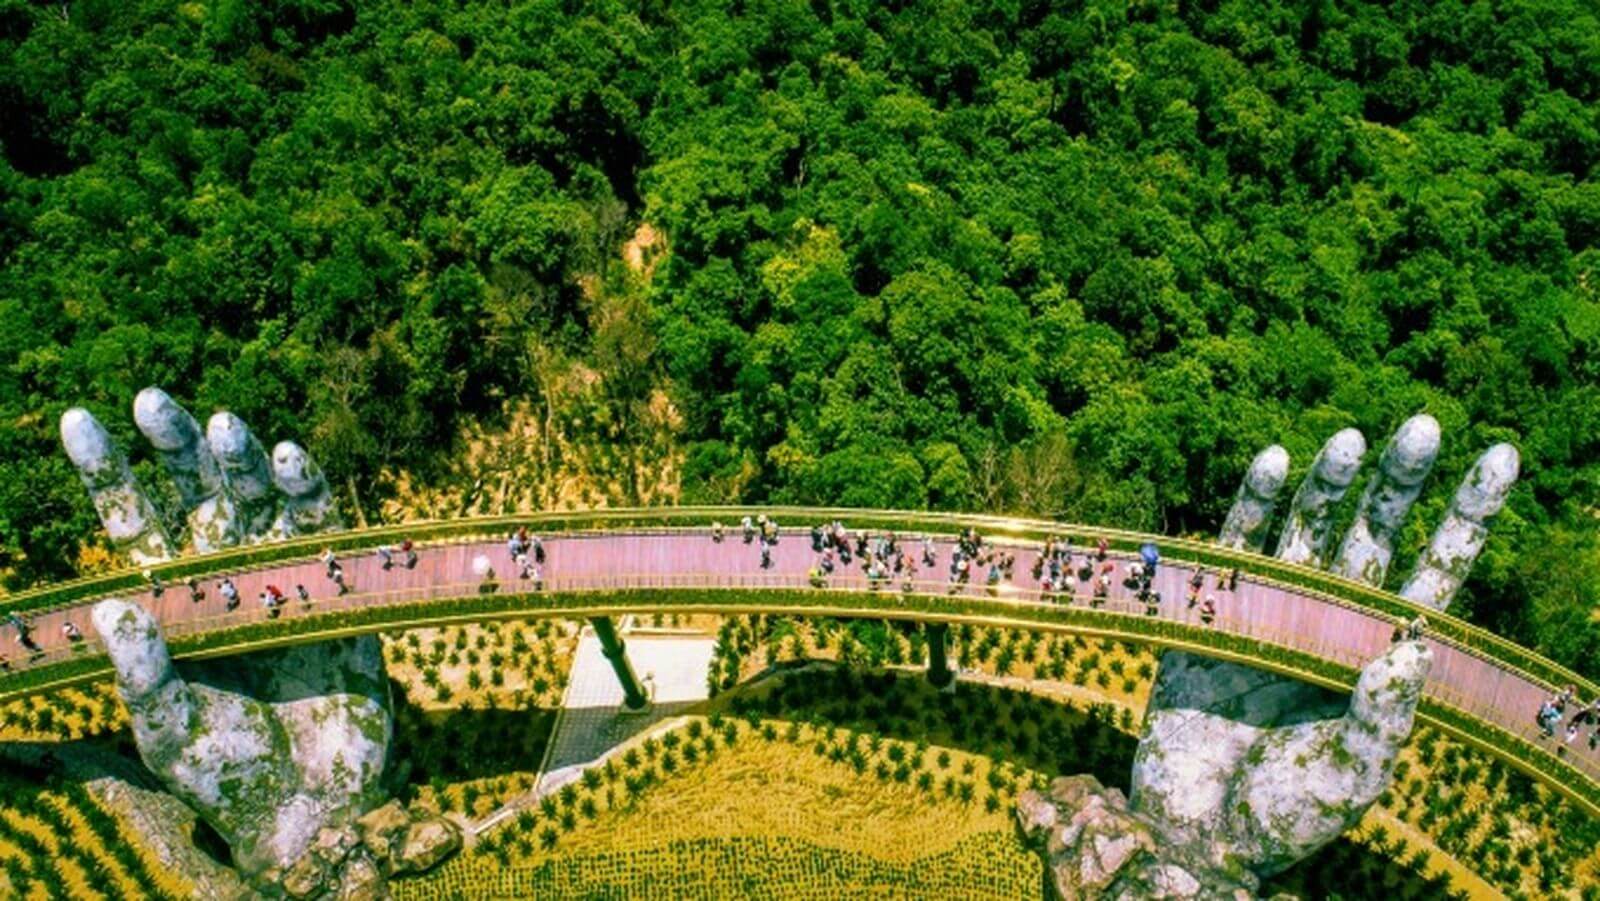 How to see vietnam’s beautiful golden bridge | travelawaits